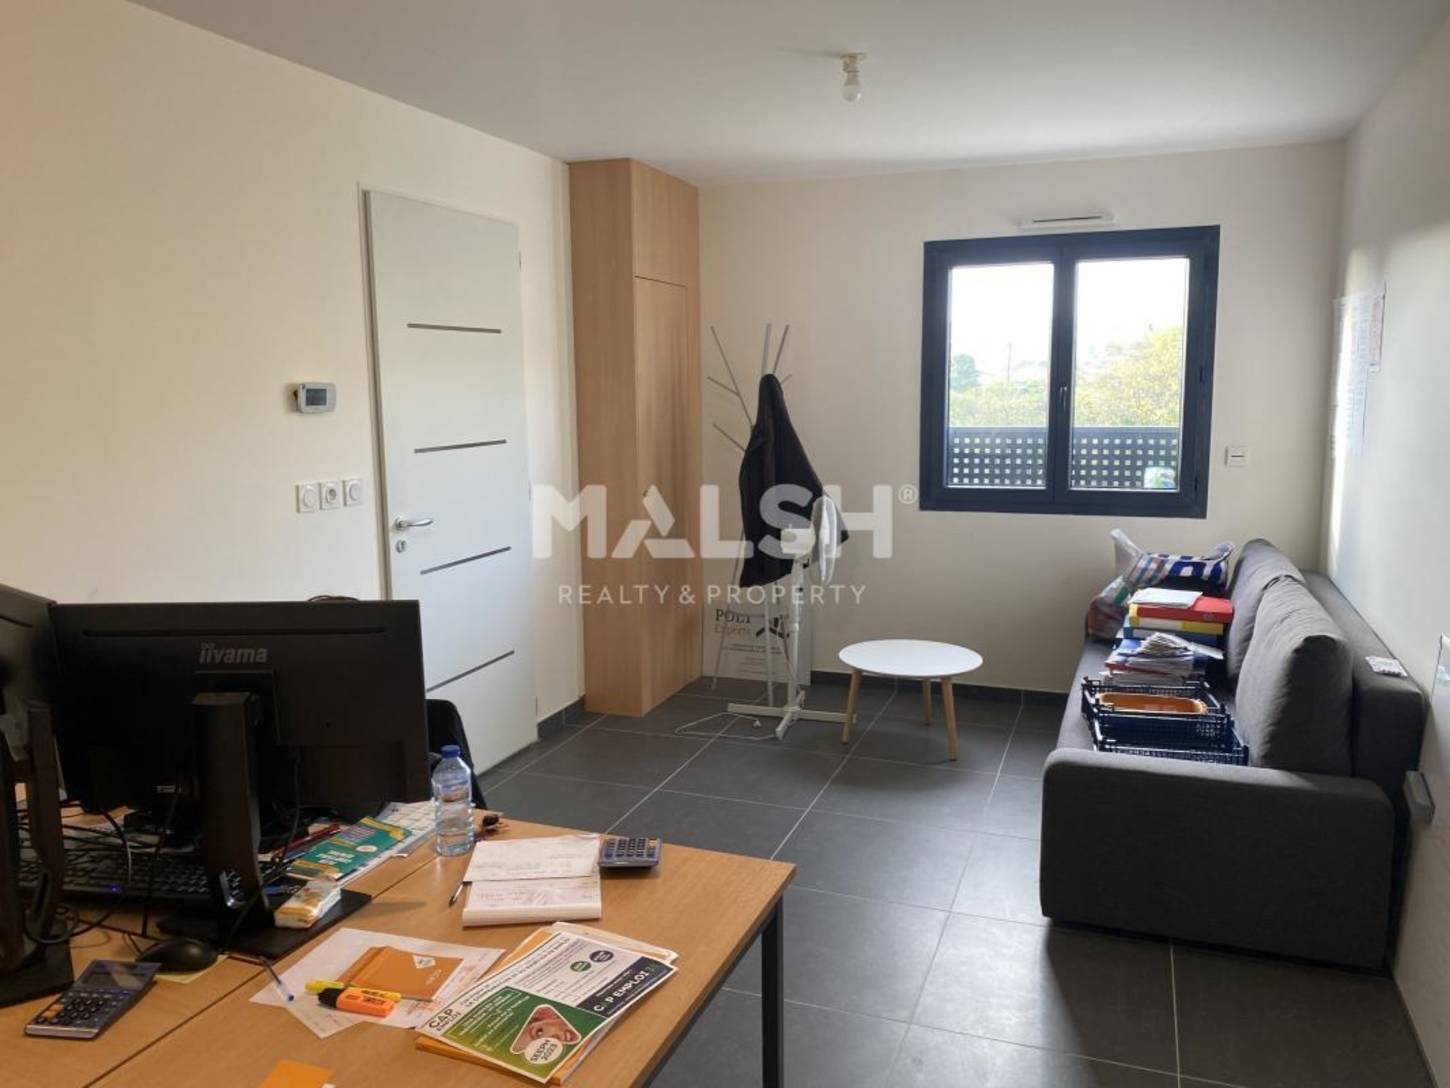 MALSH Realty & Property - Bureaux - Vienne - Vienne - 2